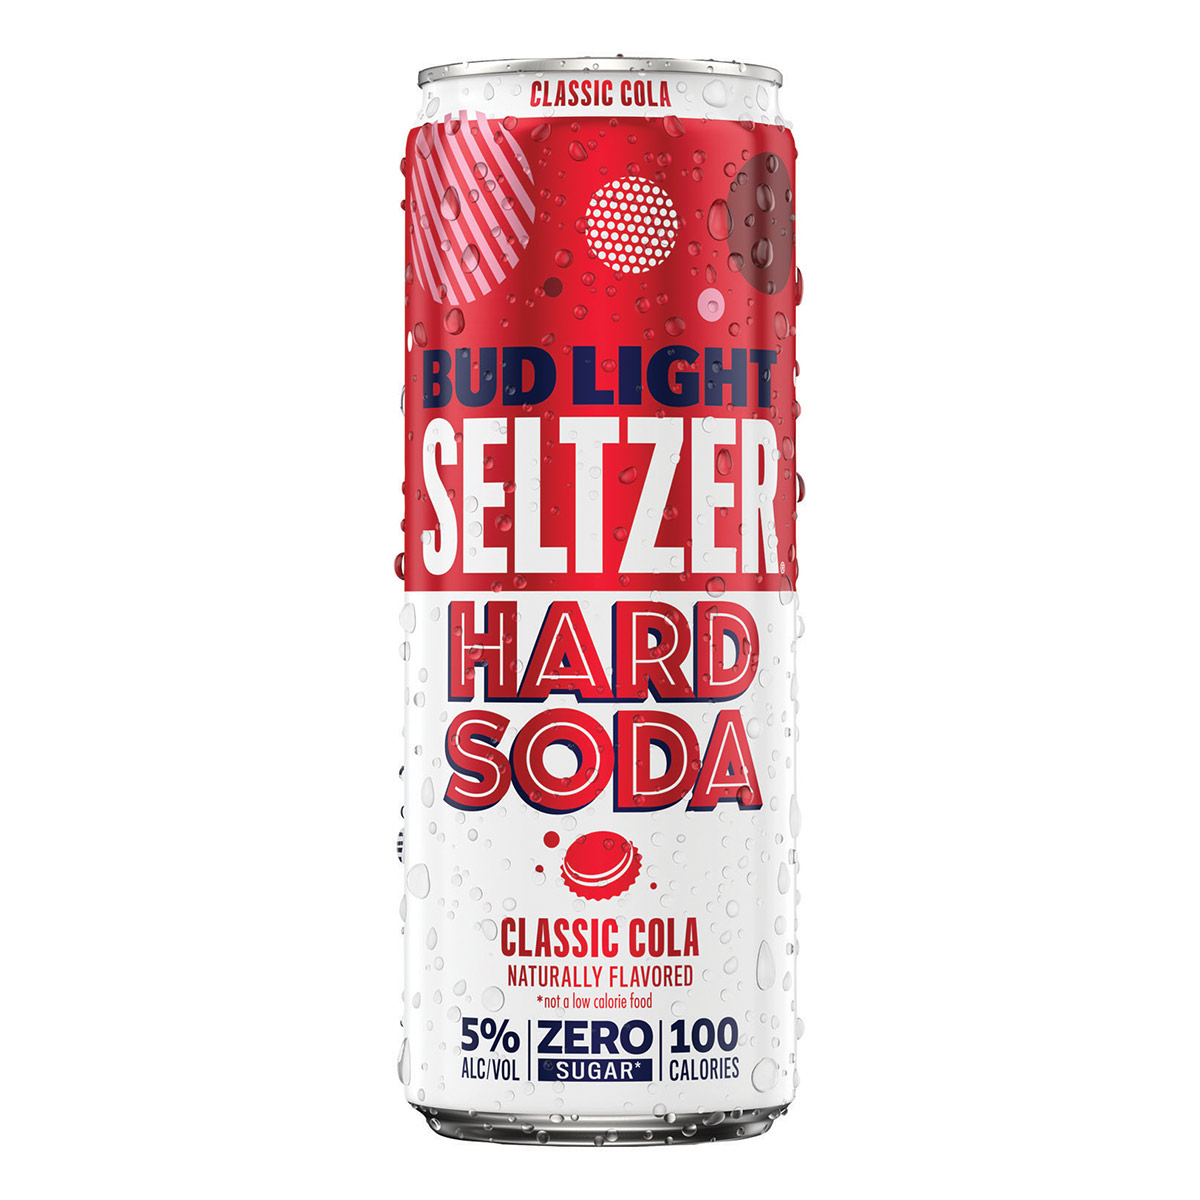 Hard Soda: Classic Cola